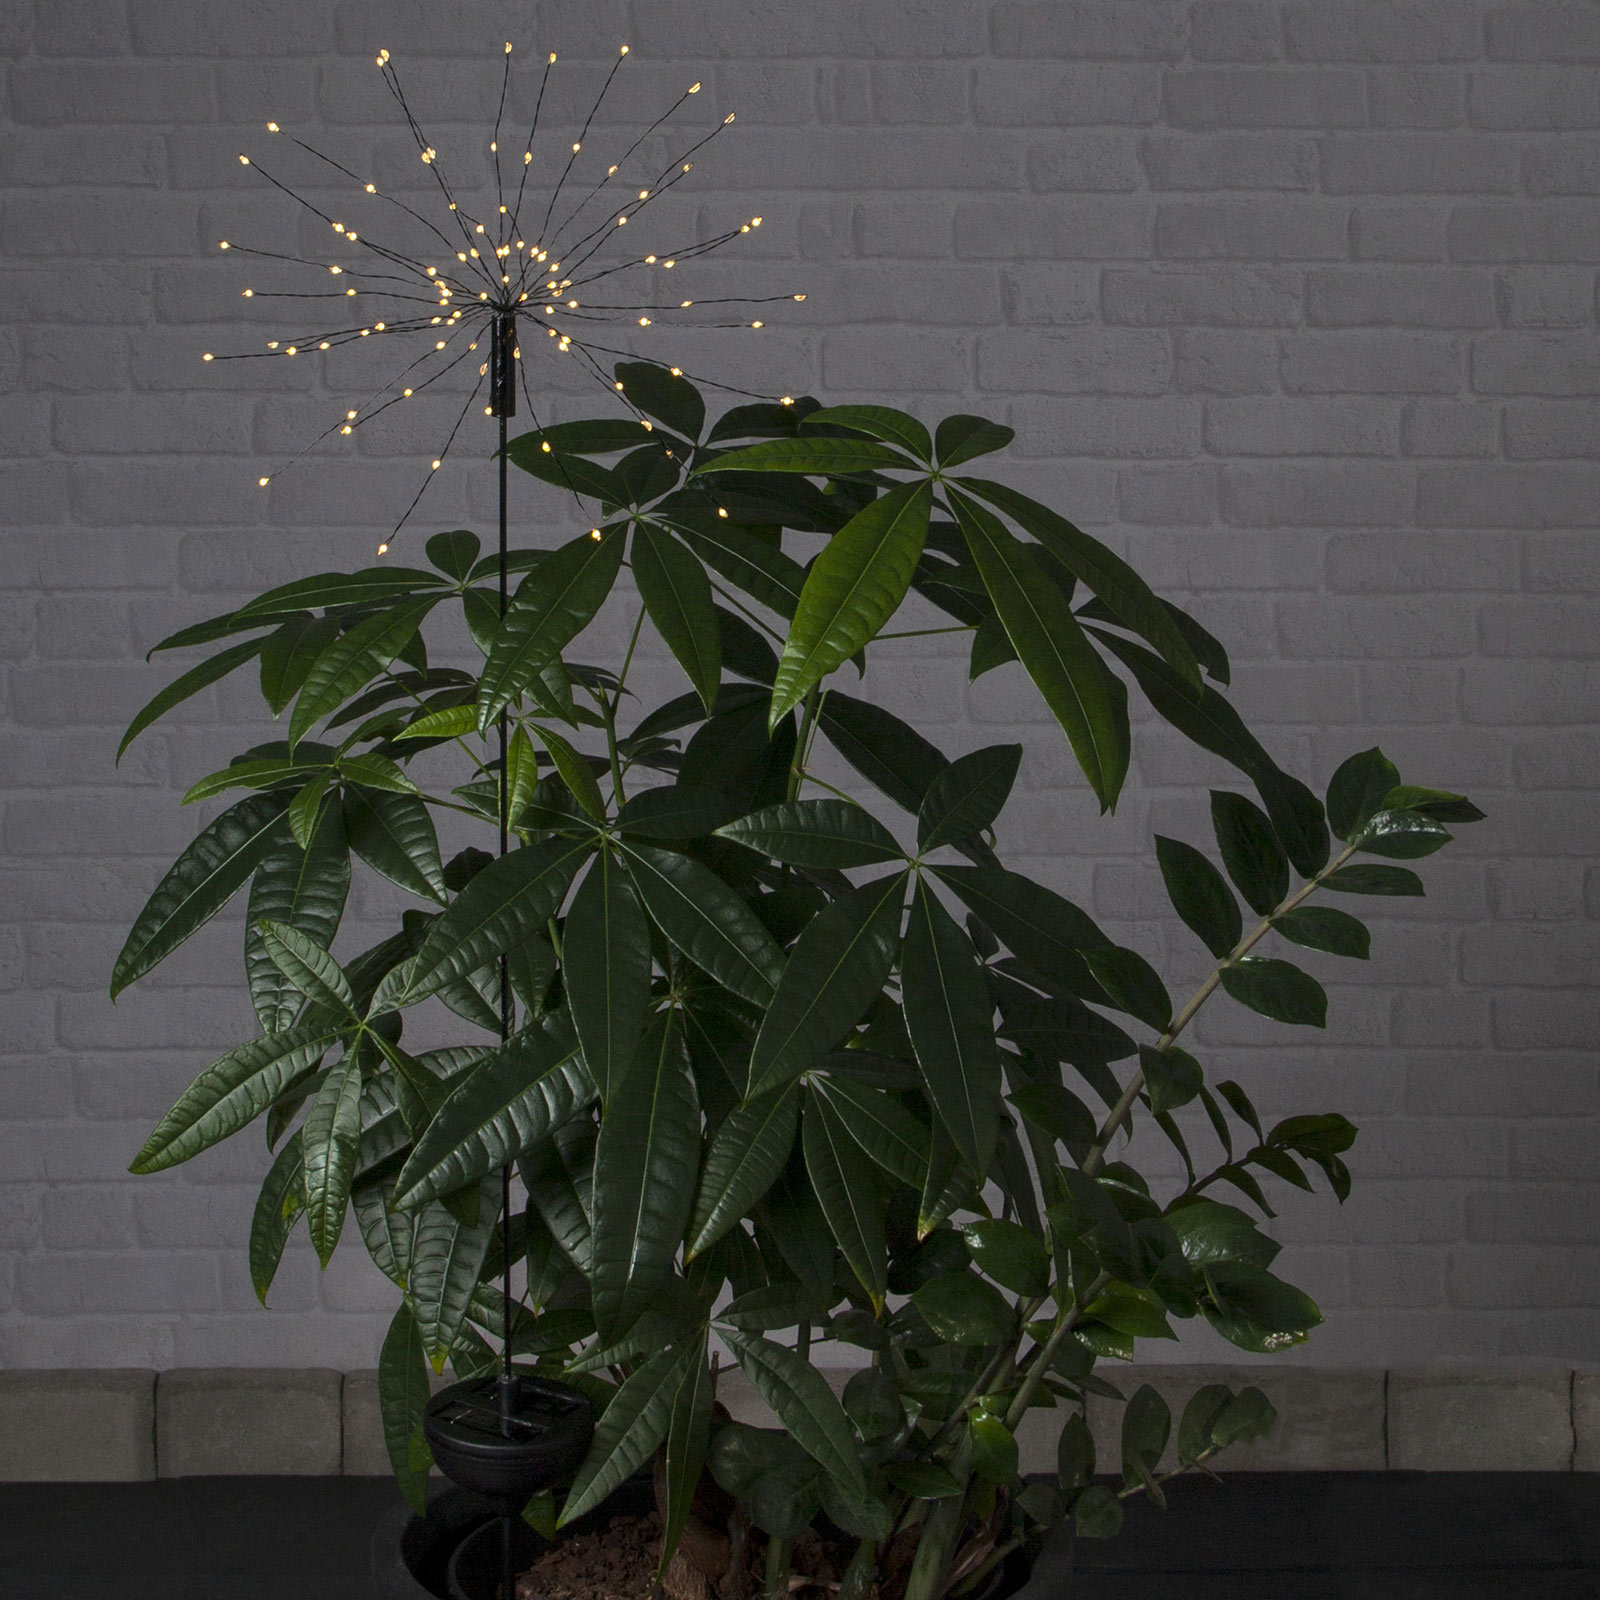 Firework LED solar light with ground spike, 100 cm